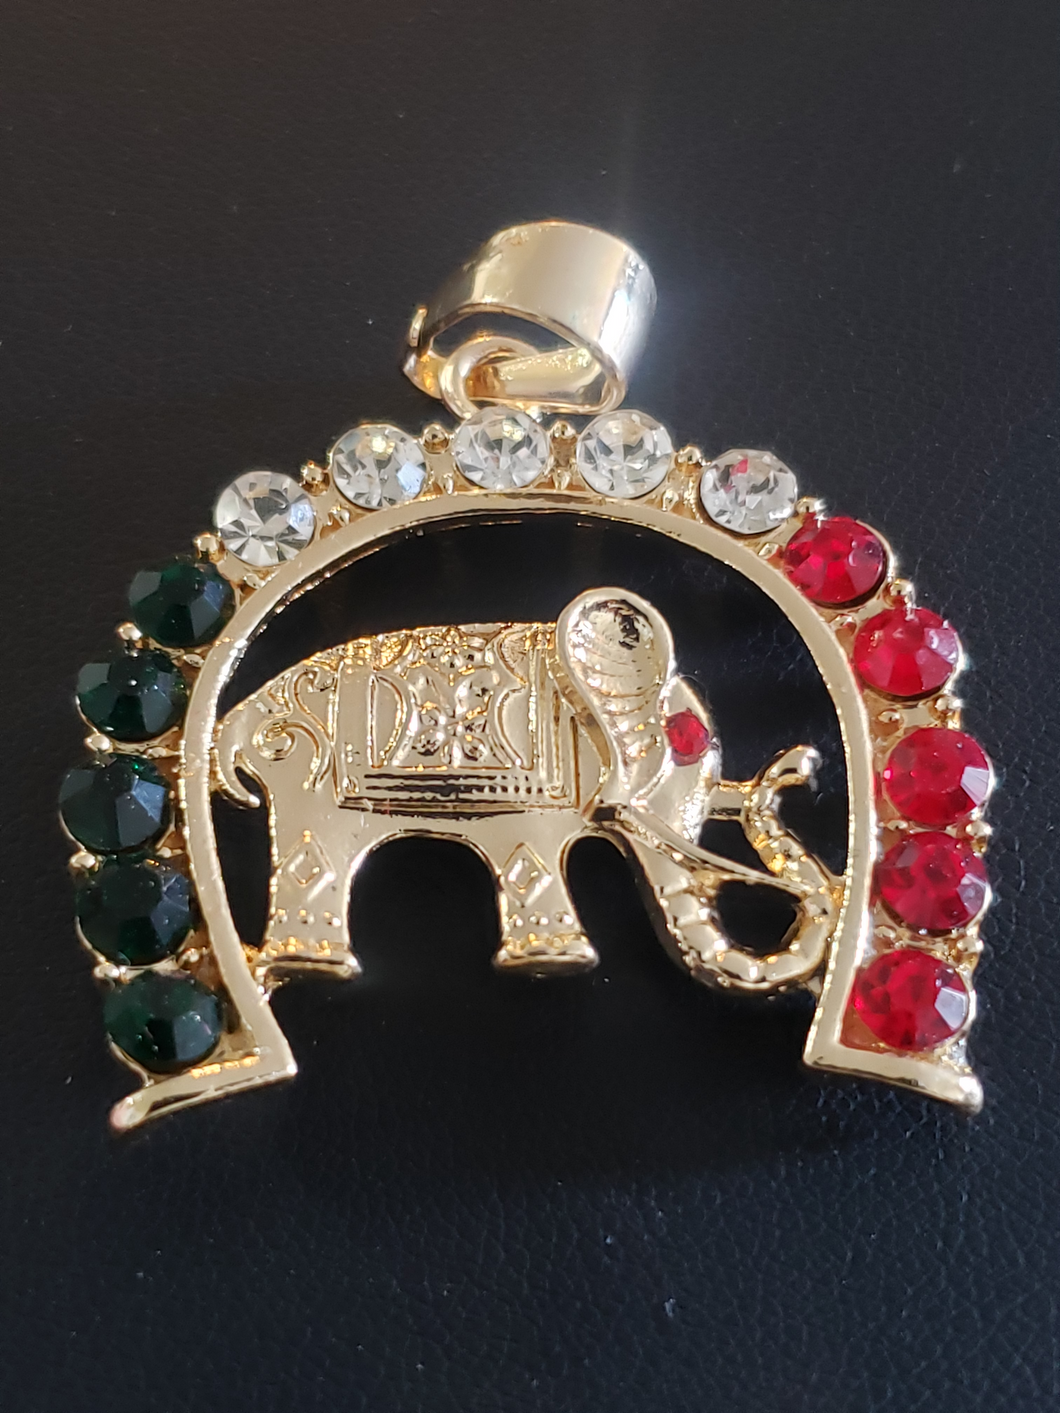 Tri color elephant pendant in upside down horseshoe